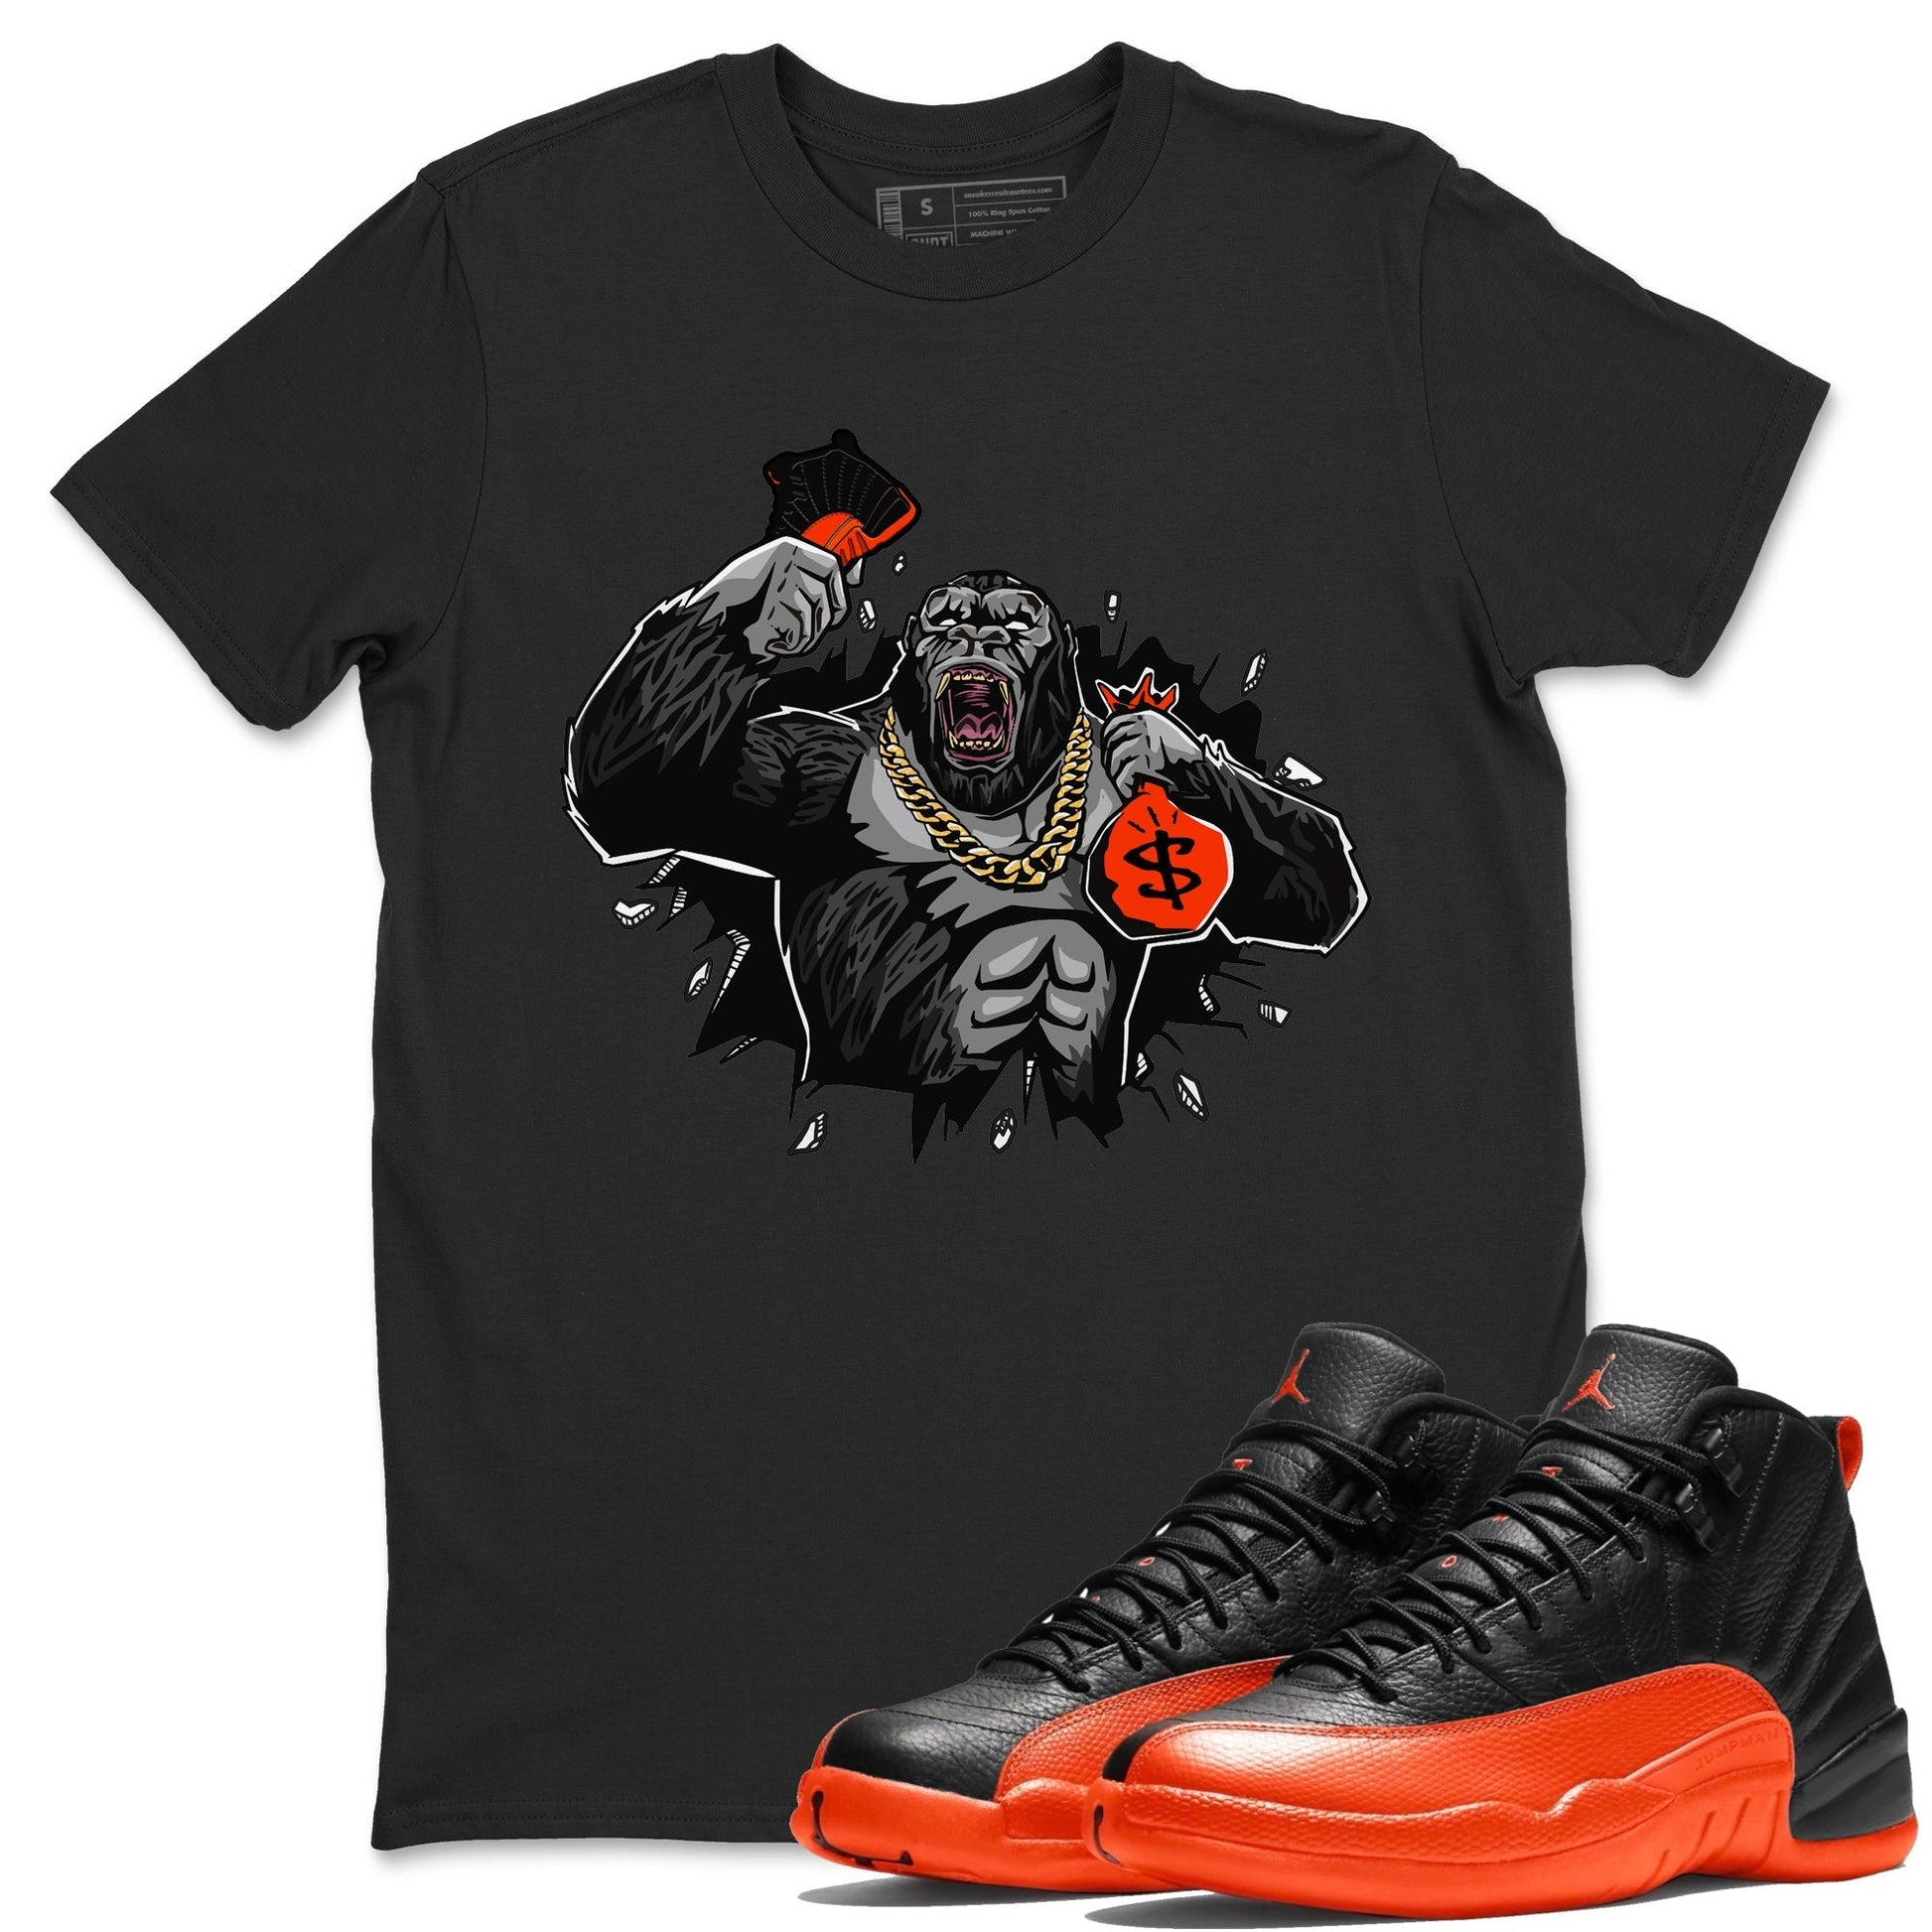 Air Jordan 12 Brilliant Orange Sneaker Match Tees Hustle Gorilla Sneaker Tees AJ12 Brilliant Orange Sneaker Release Tees Unisex Shirts Black 1